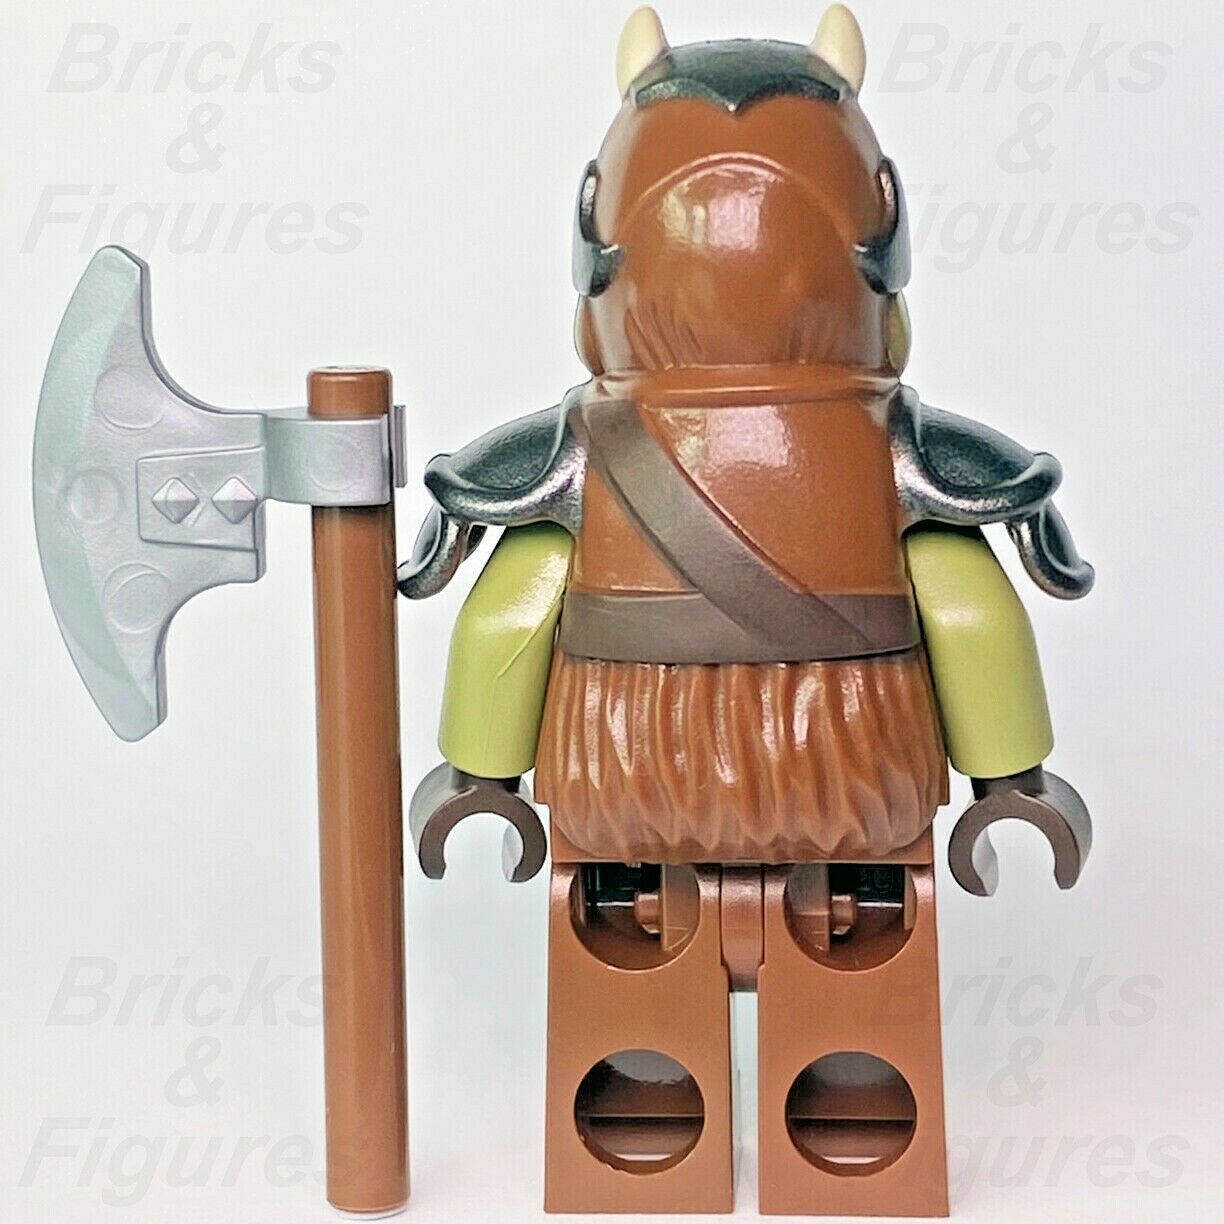 Star Wars LEGO Gamorrean Guard The Book of Boba Fett Minifigure 75326 sw1196 - Bricks & Figures